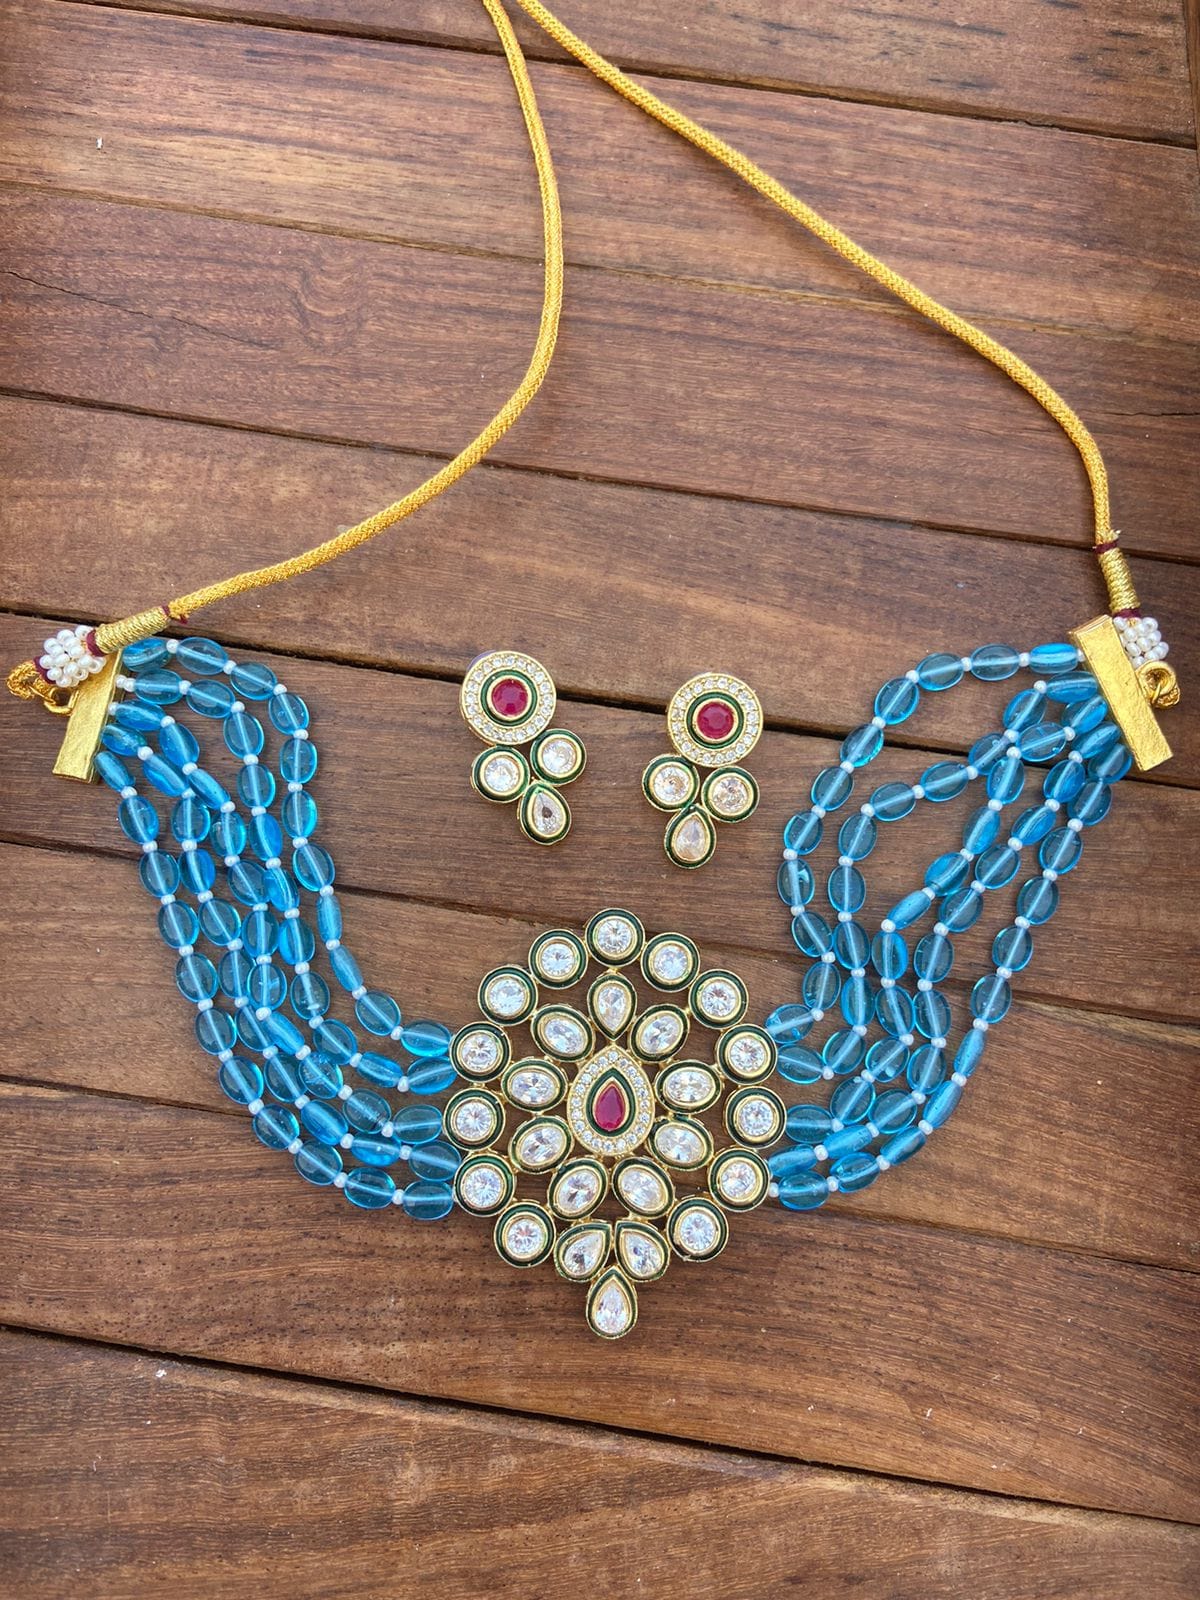 999 monalisa beads choker - Alluring Accessories